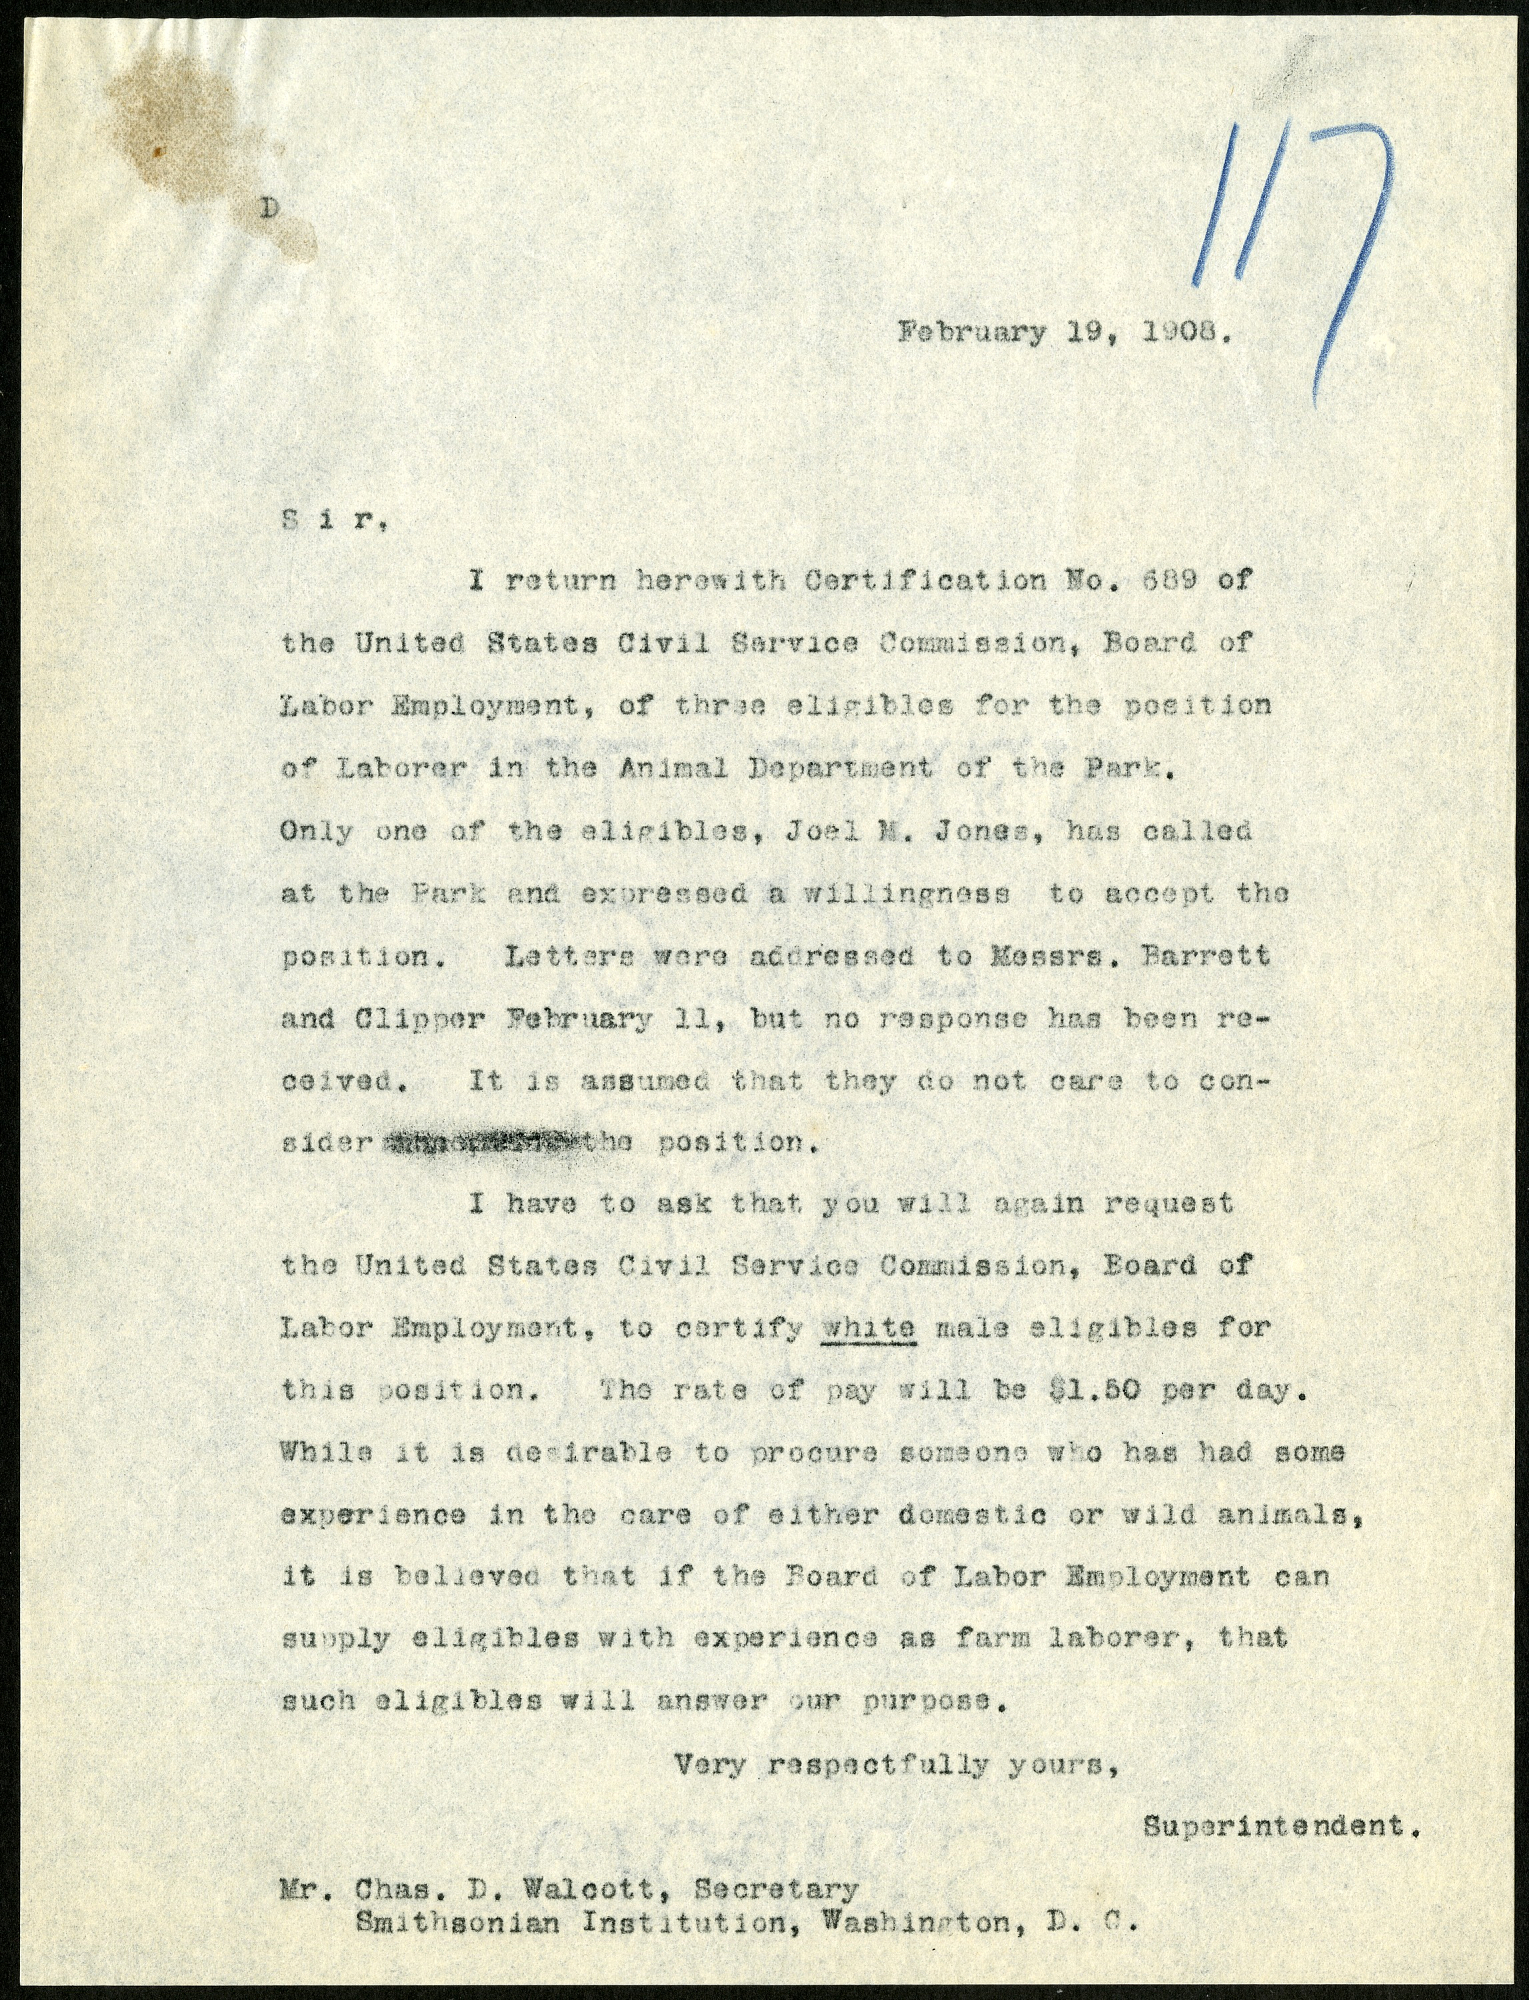 Exchange of letters between Walcott, his assistant and zoo director, 1908.